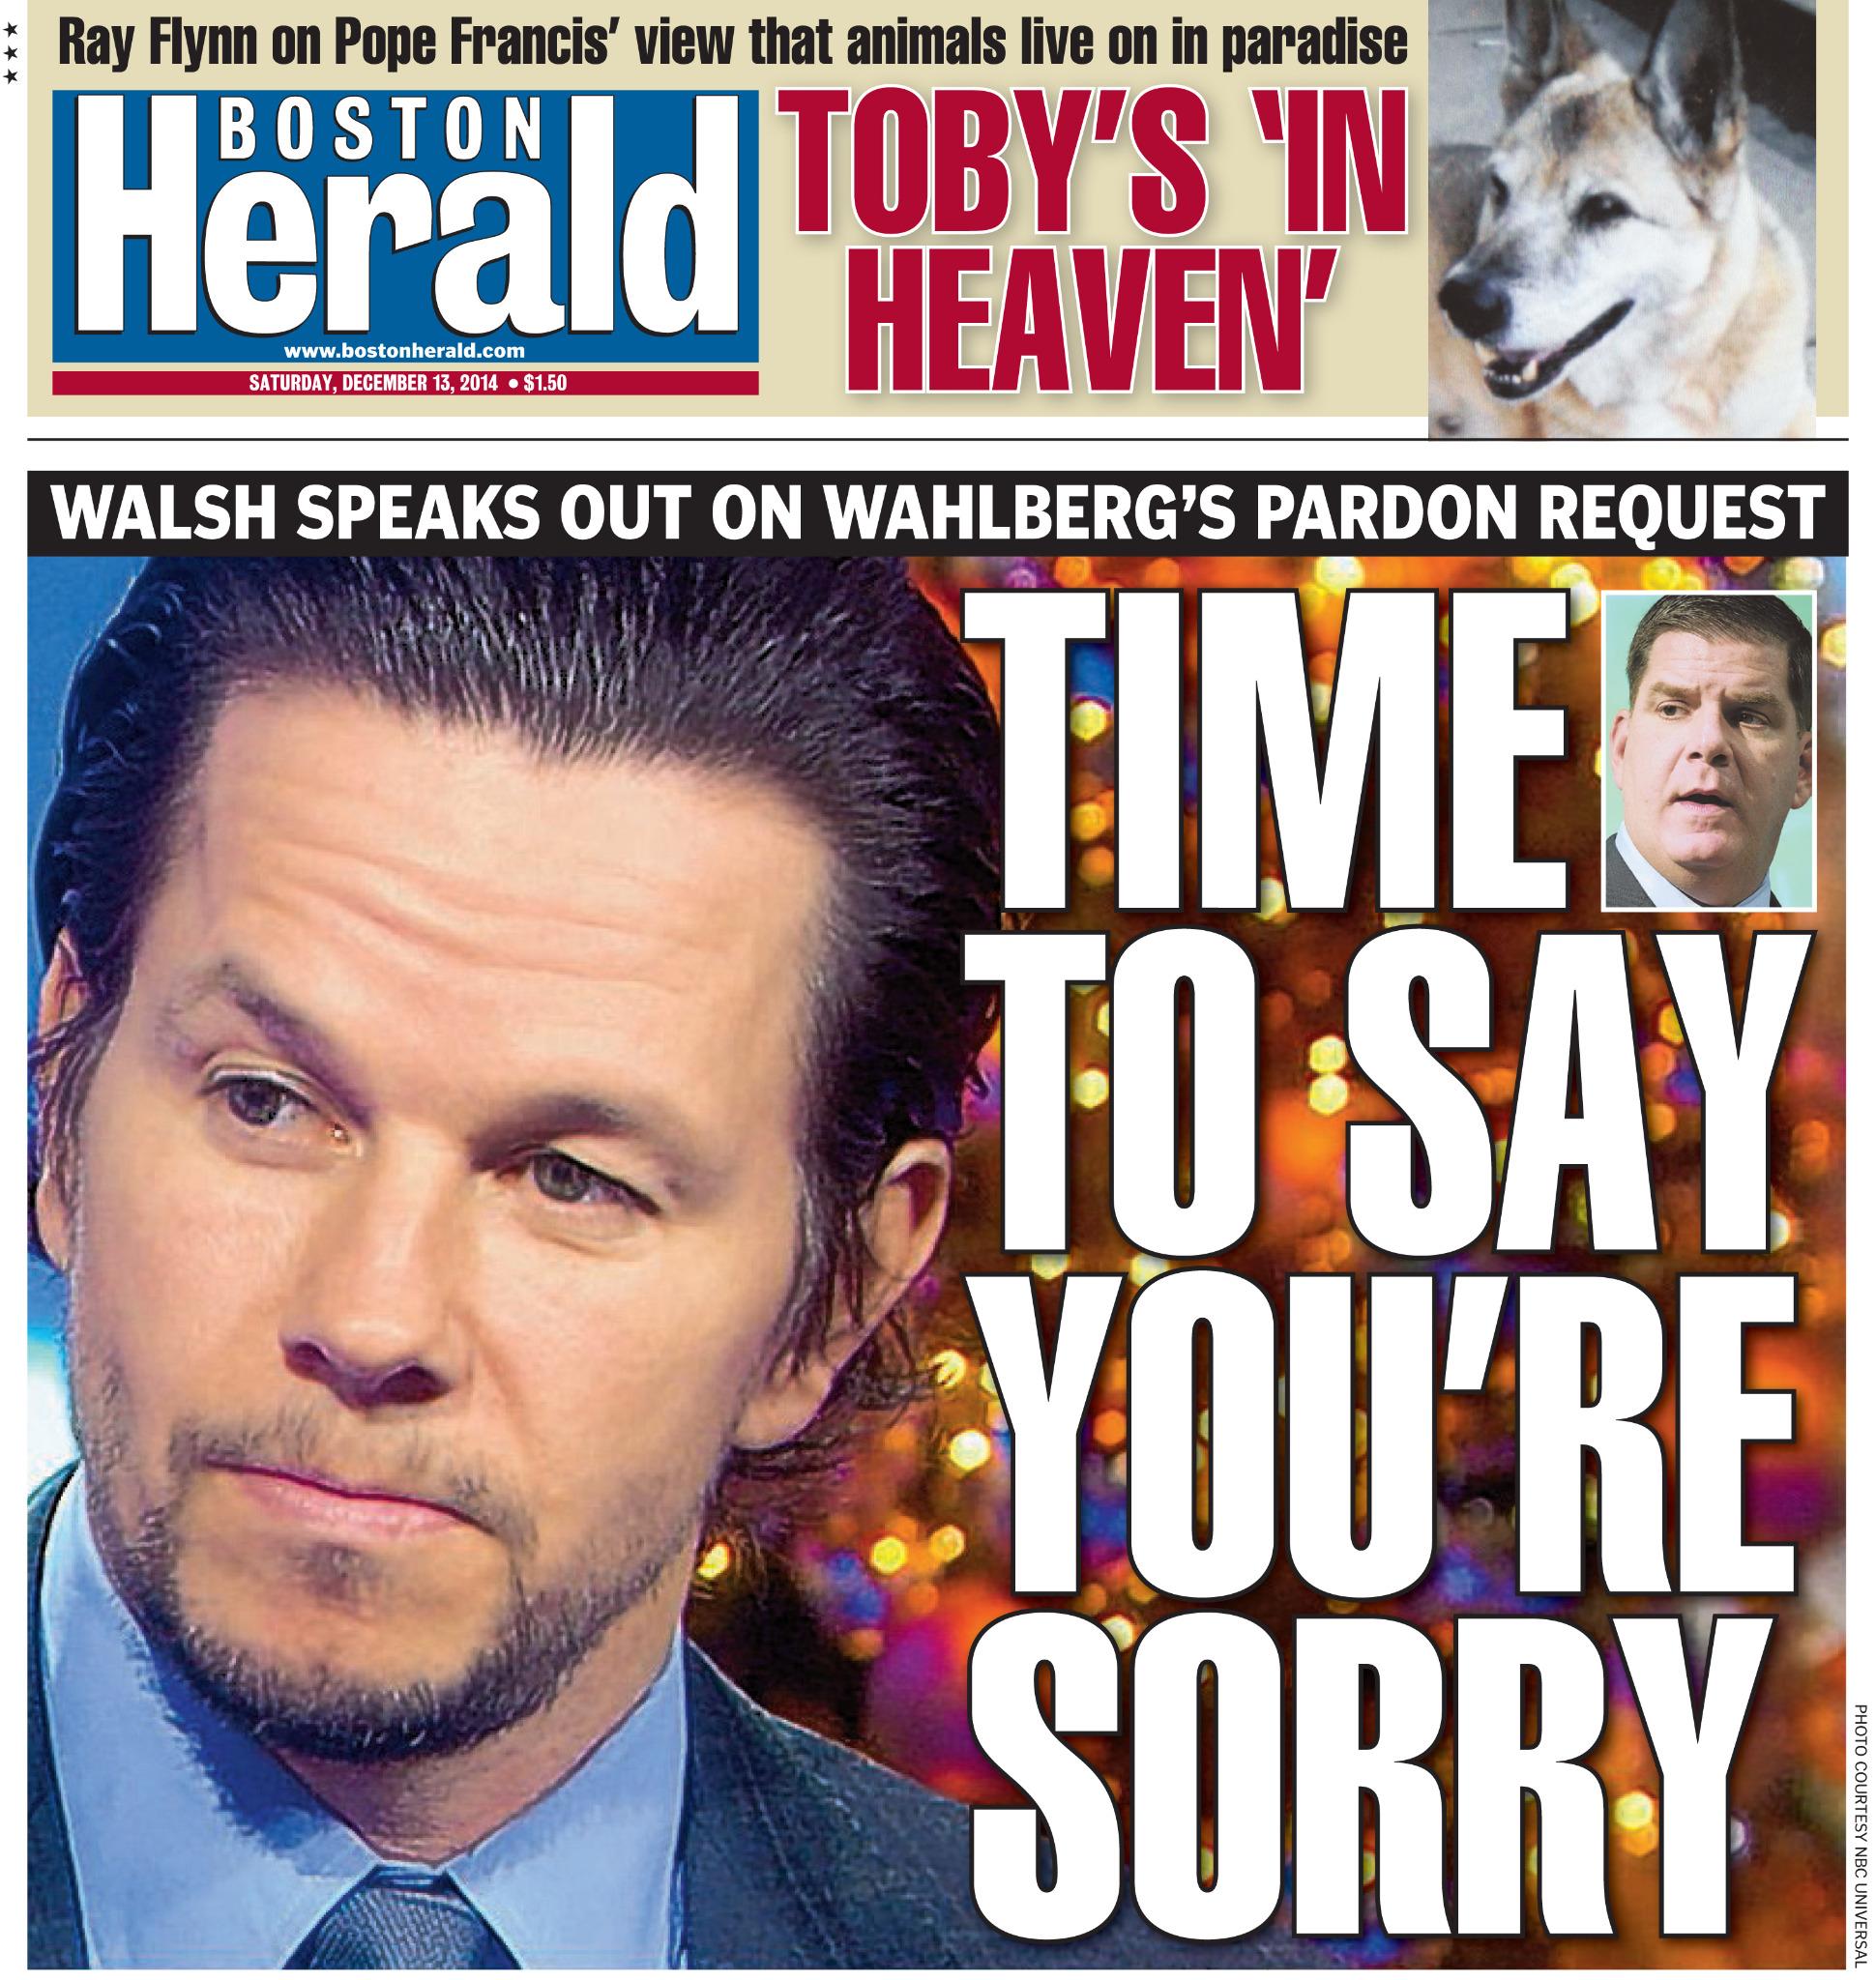 Boston Herald on Twitter: "Boston Herald front page -- December 13